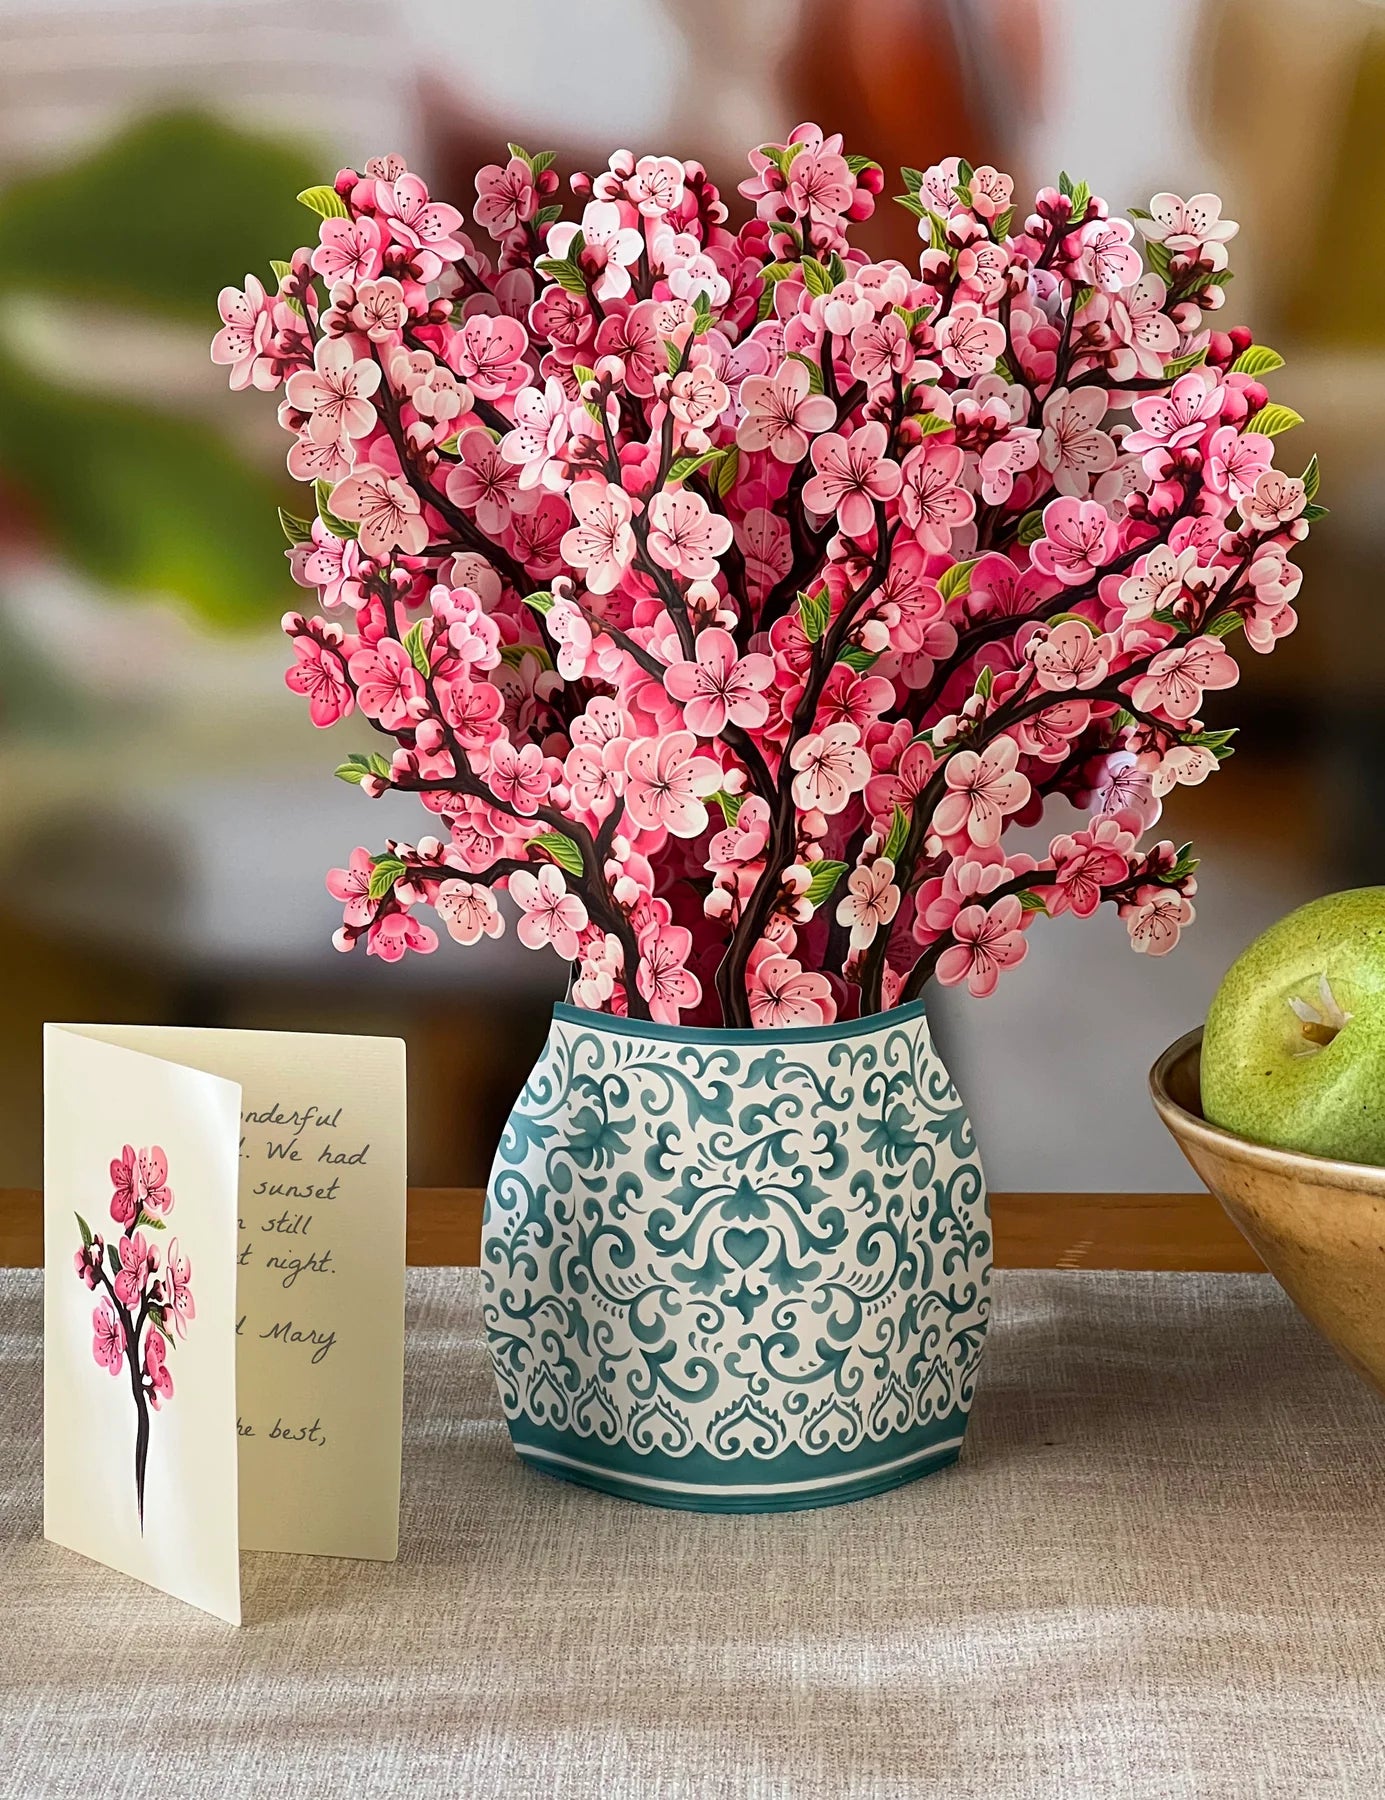 Cherry Blossom Pop-up Bouquet